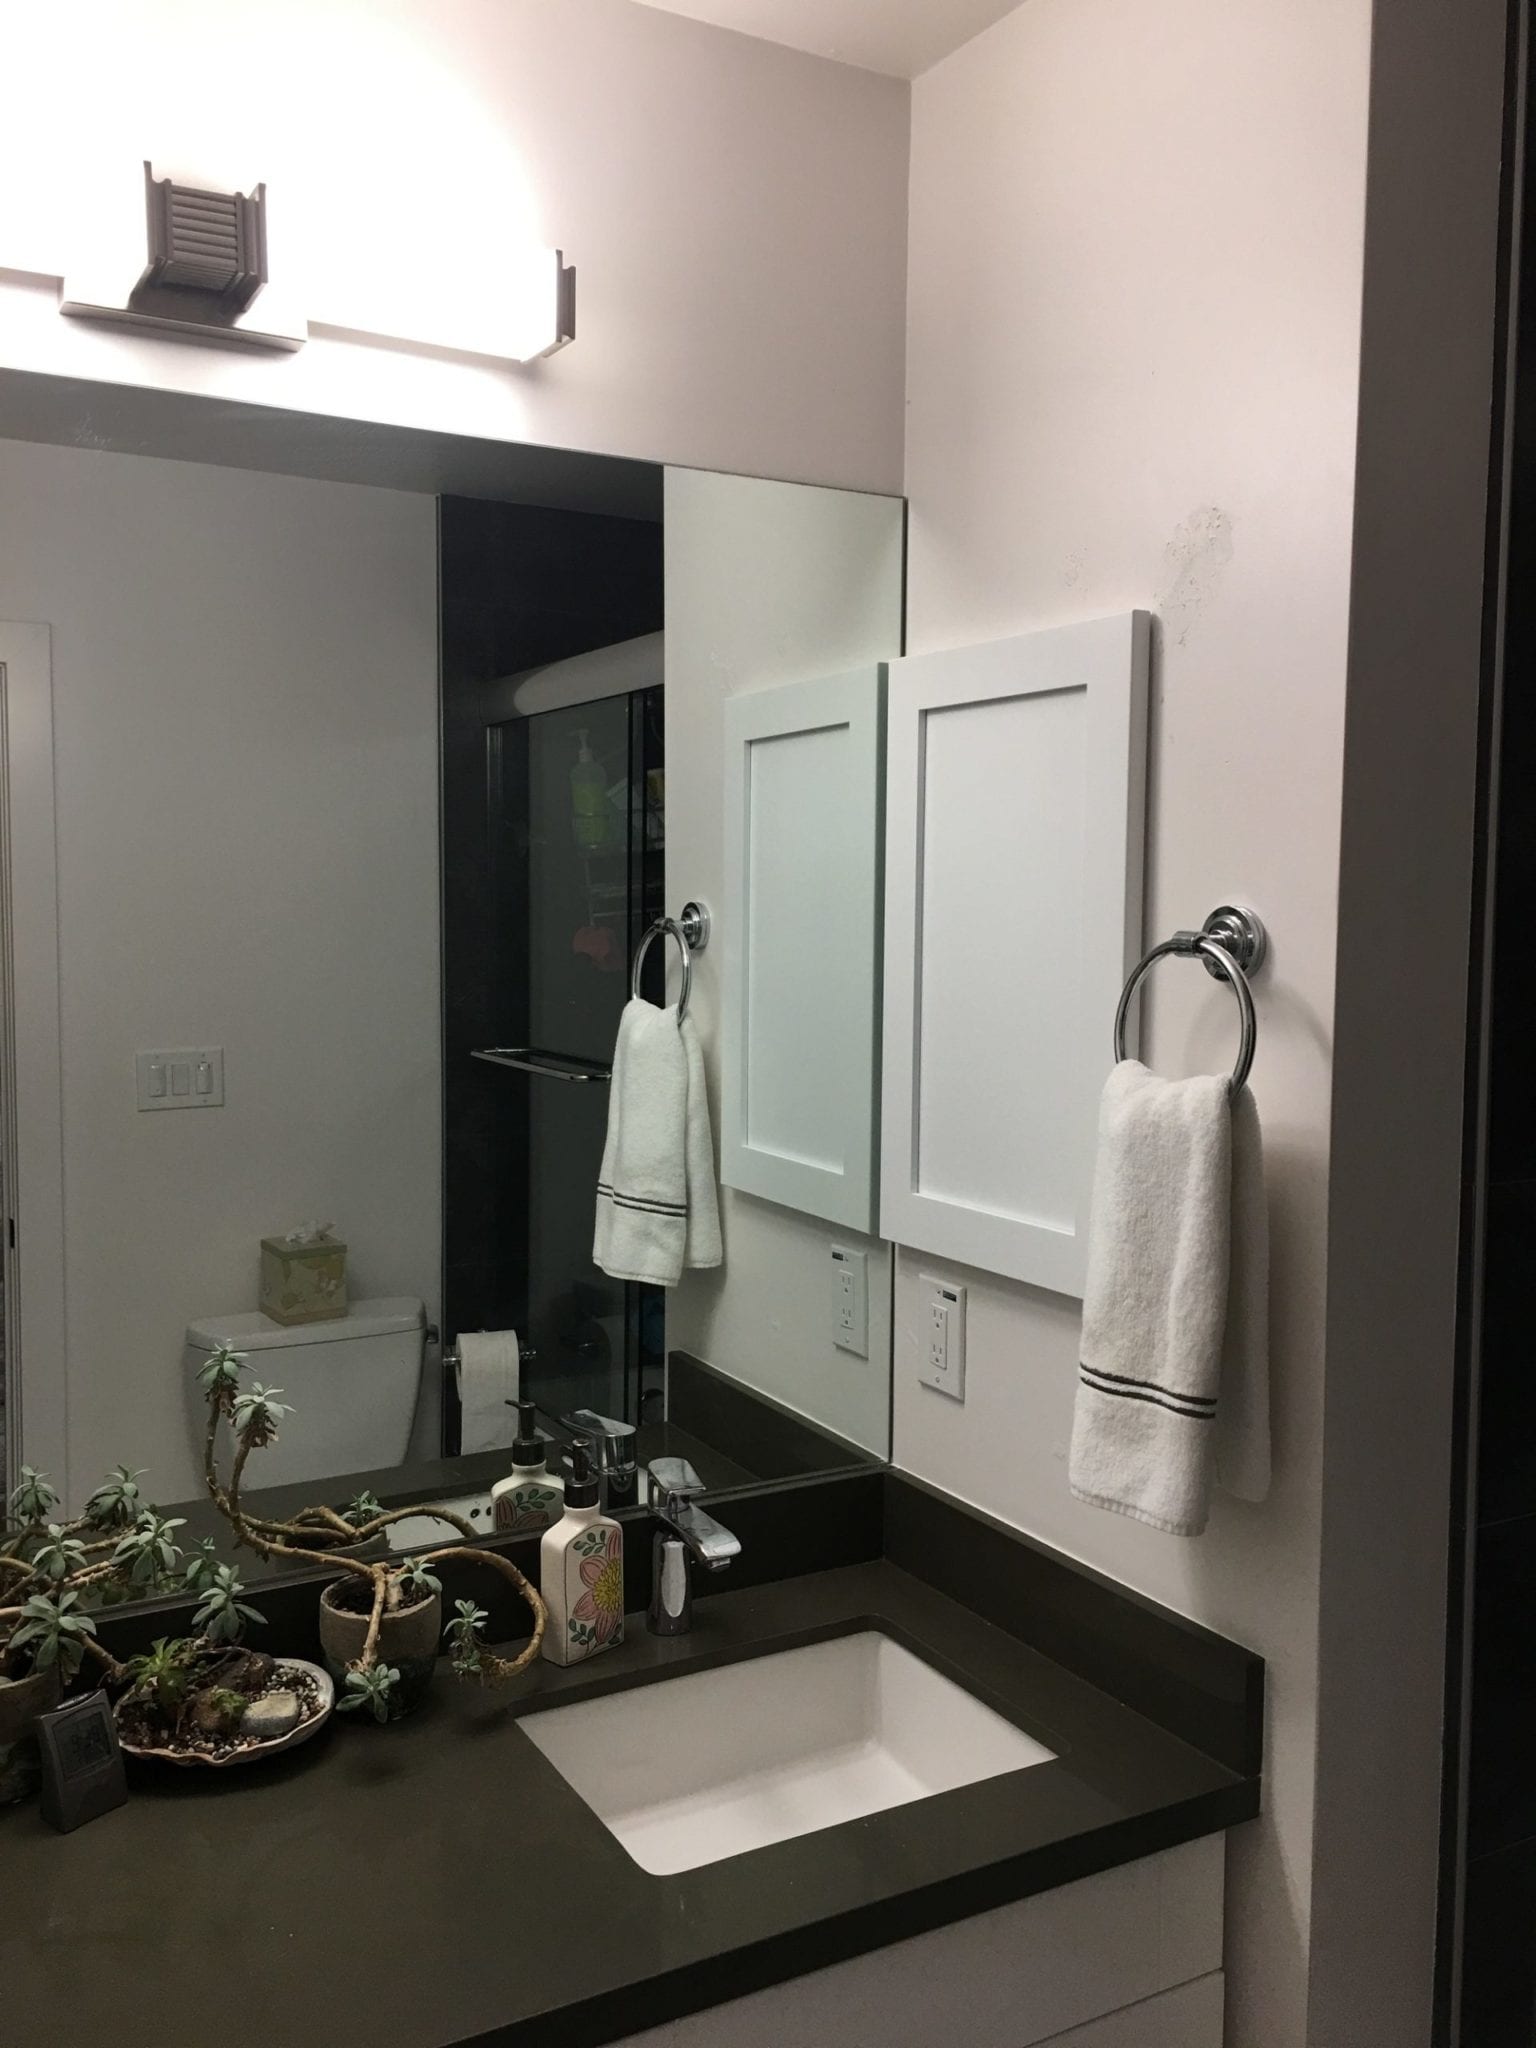 27 W x 29 H x 9 D Wall Mounted Bathroom Cabinet